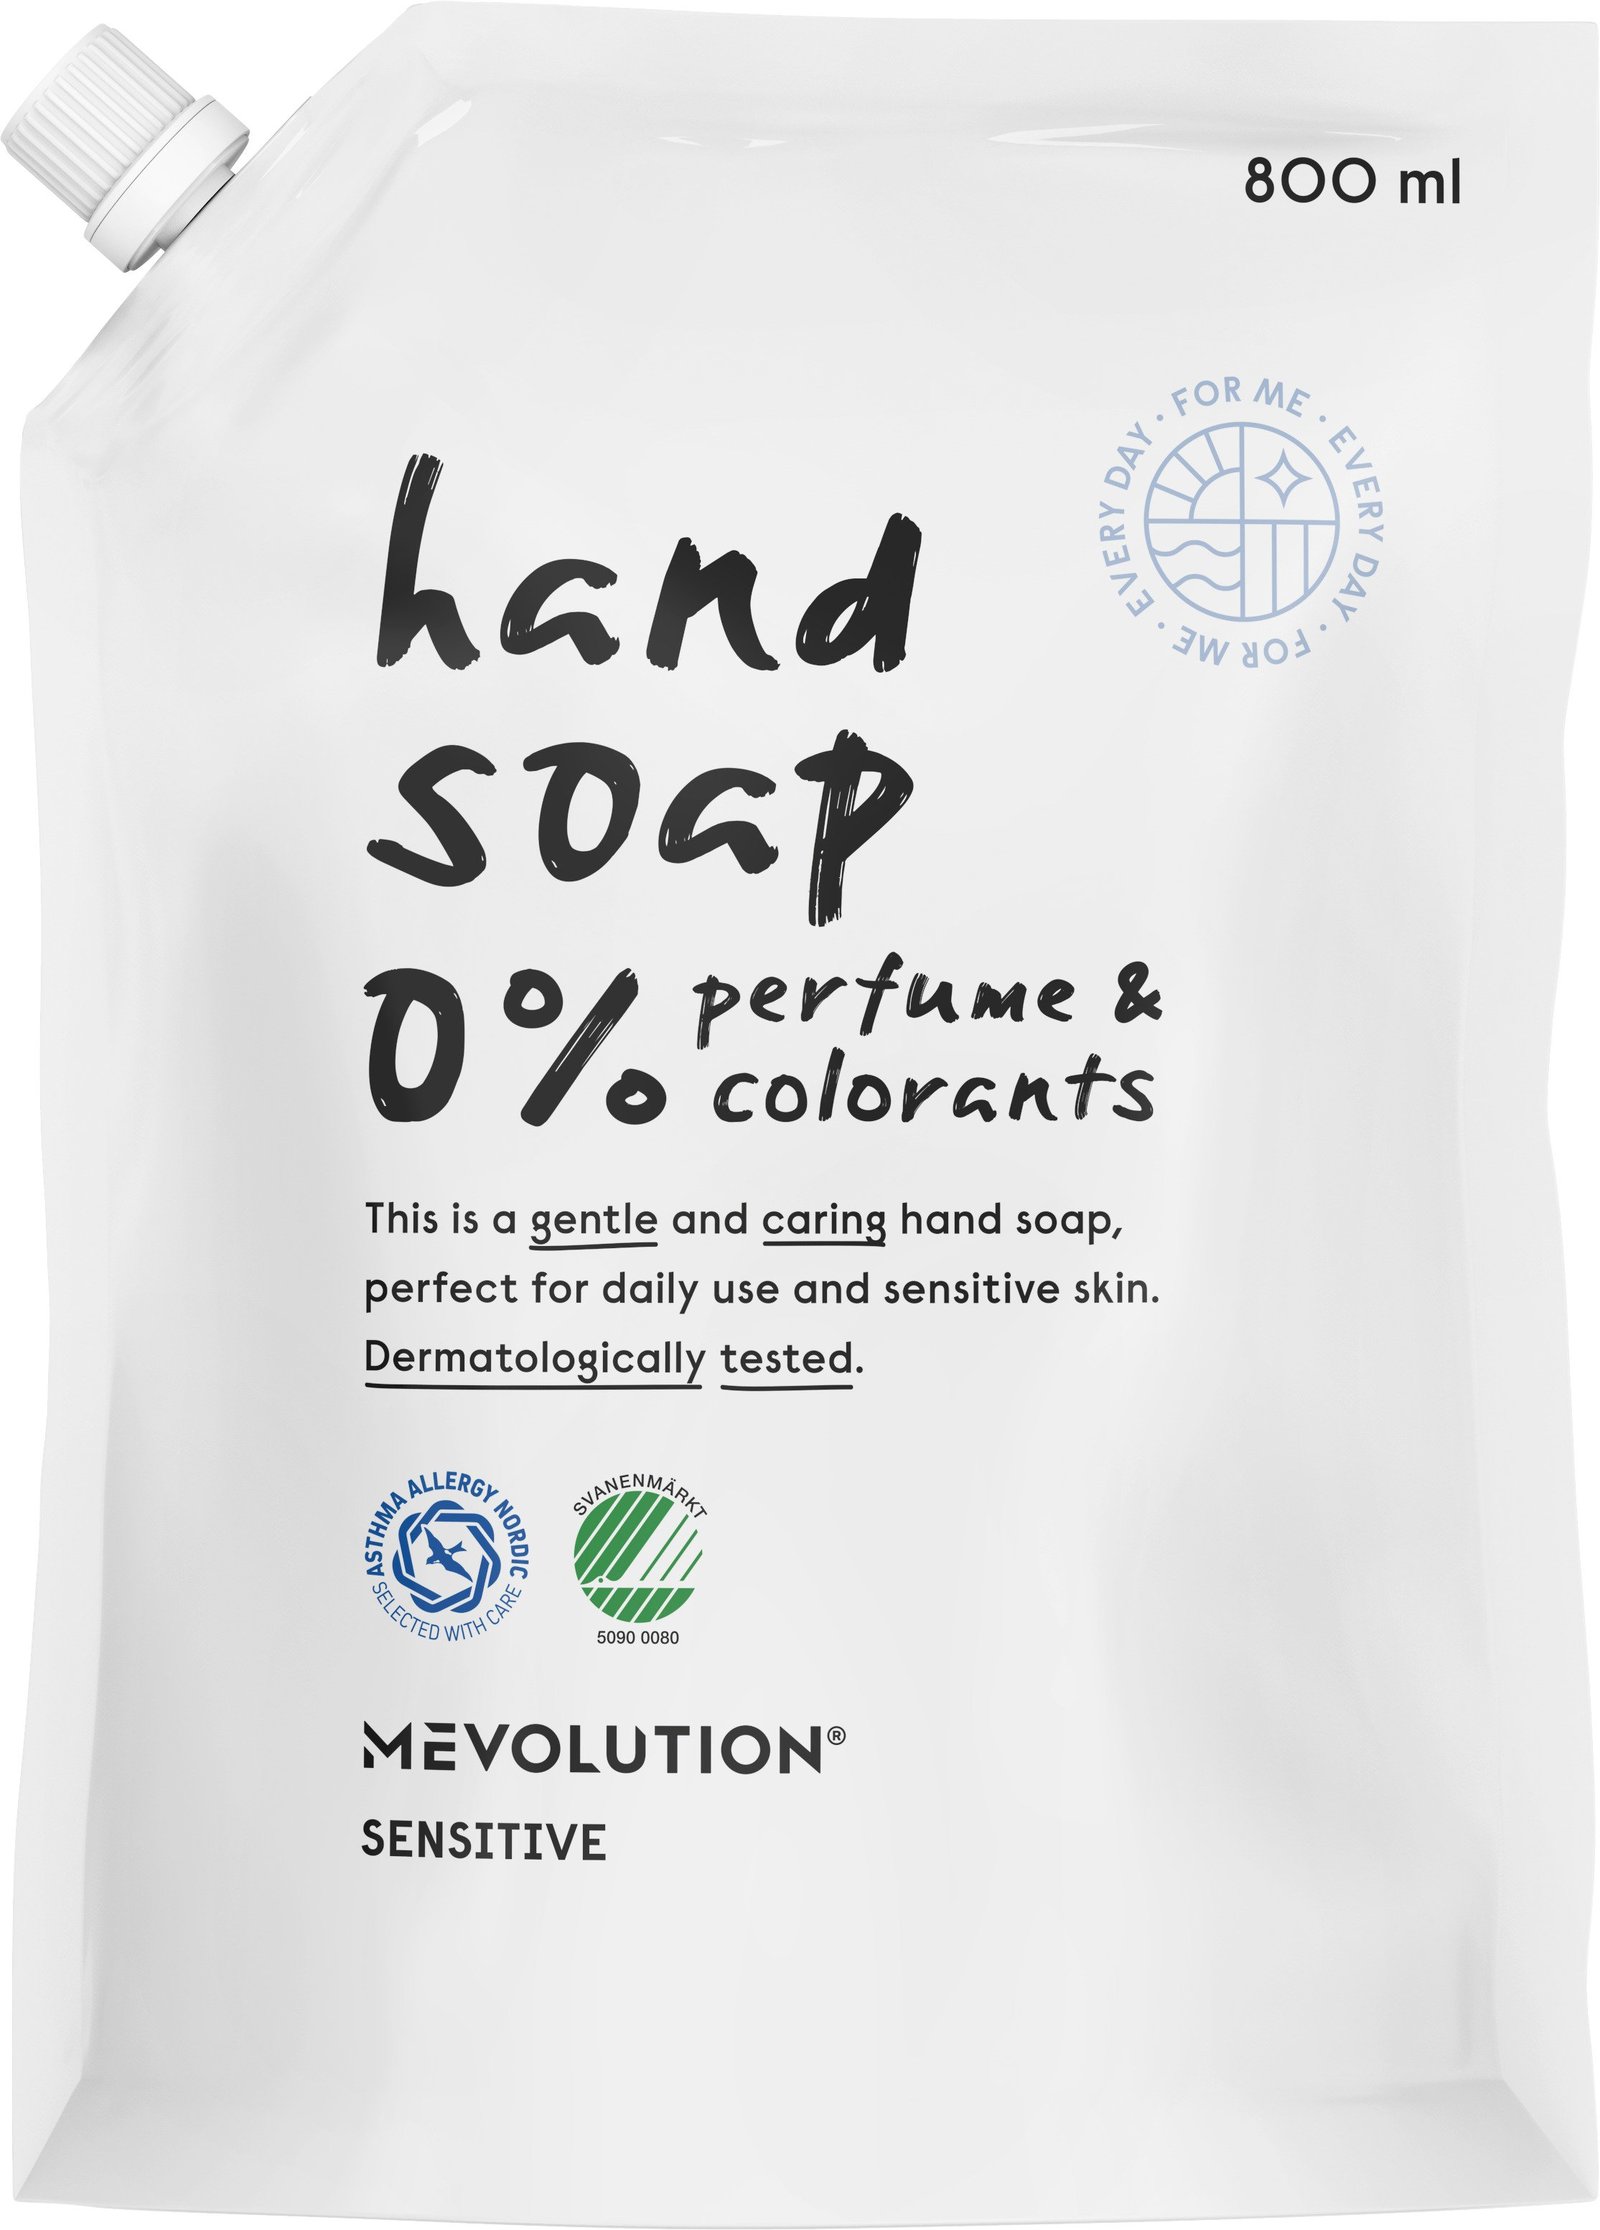 Mevolution Sensitive Hand Soap Refill 800 ml